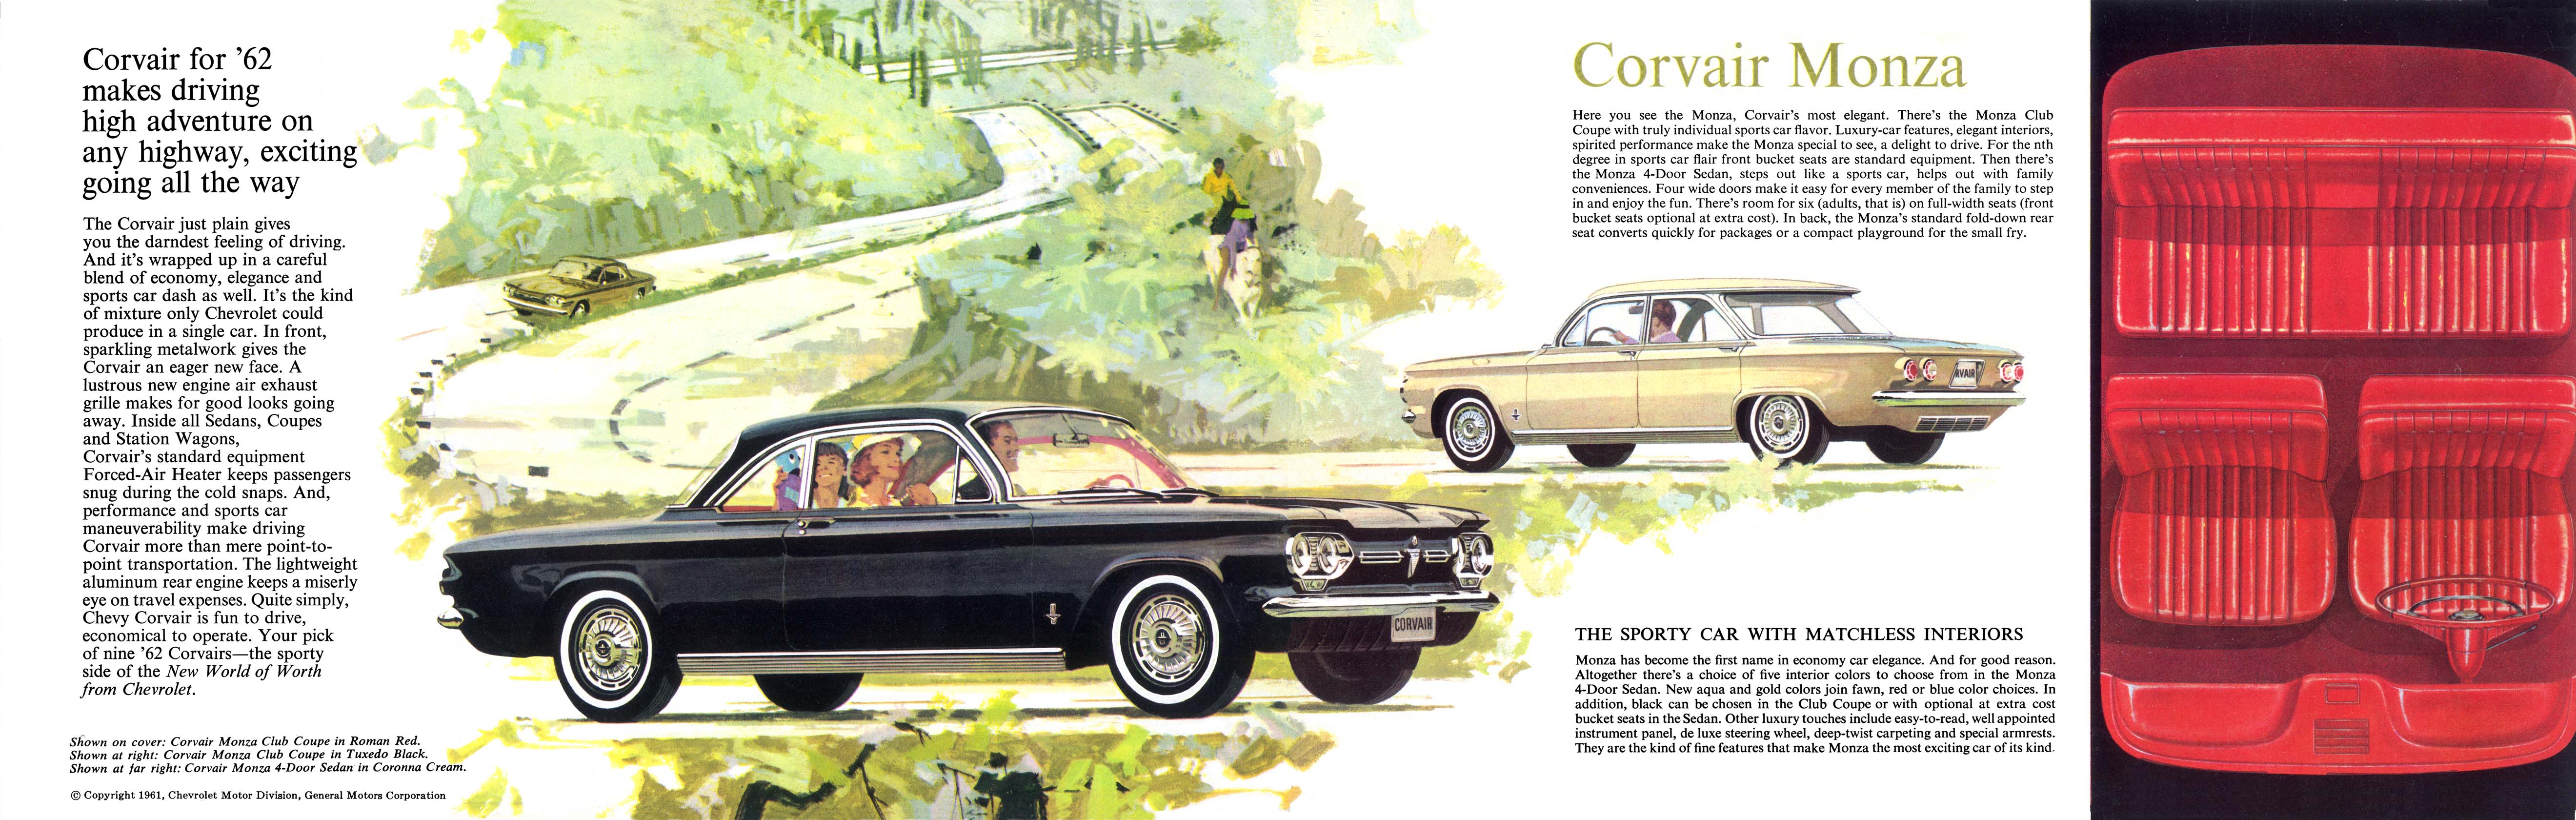 1962_Chevrolet_Corvair-02-03